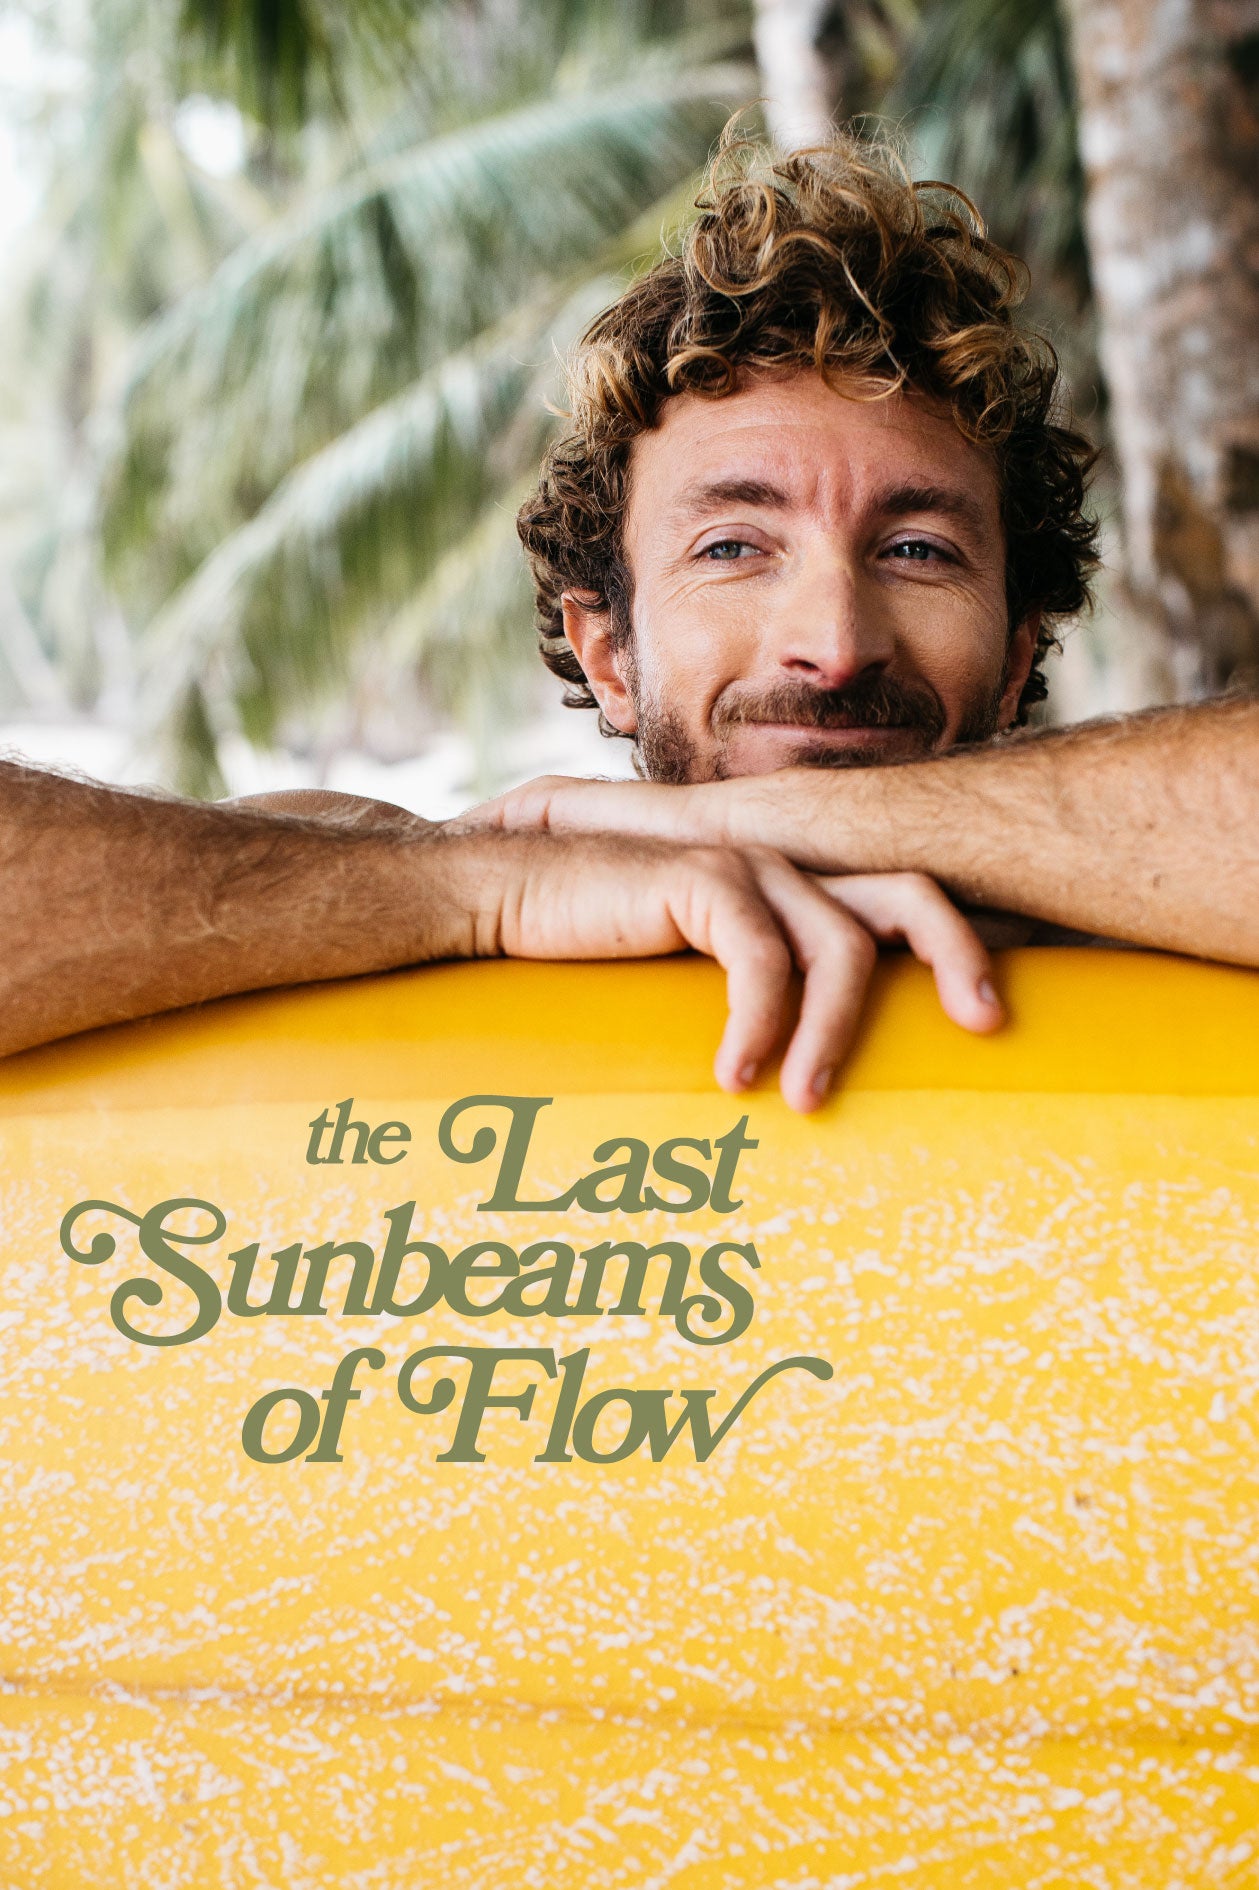 The Last Sunbeams of flow /  ラスト サンビームス オブ フロウ